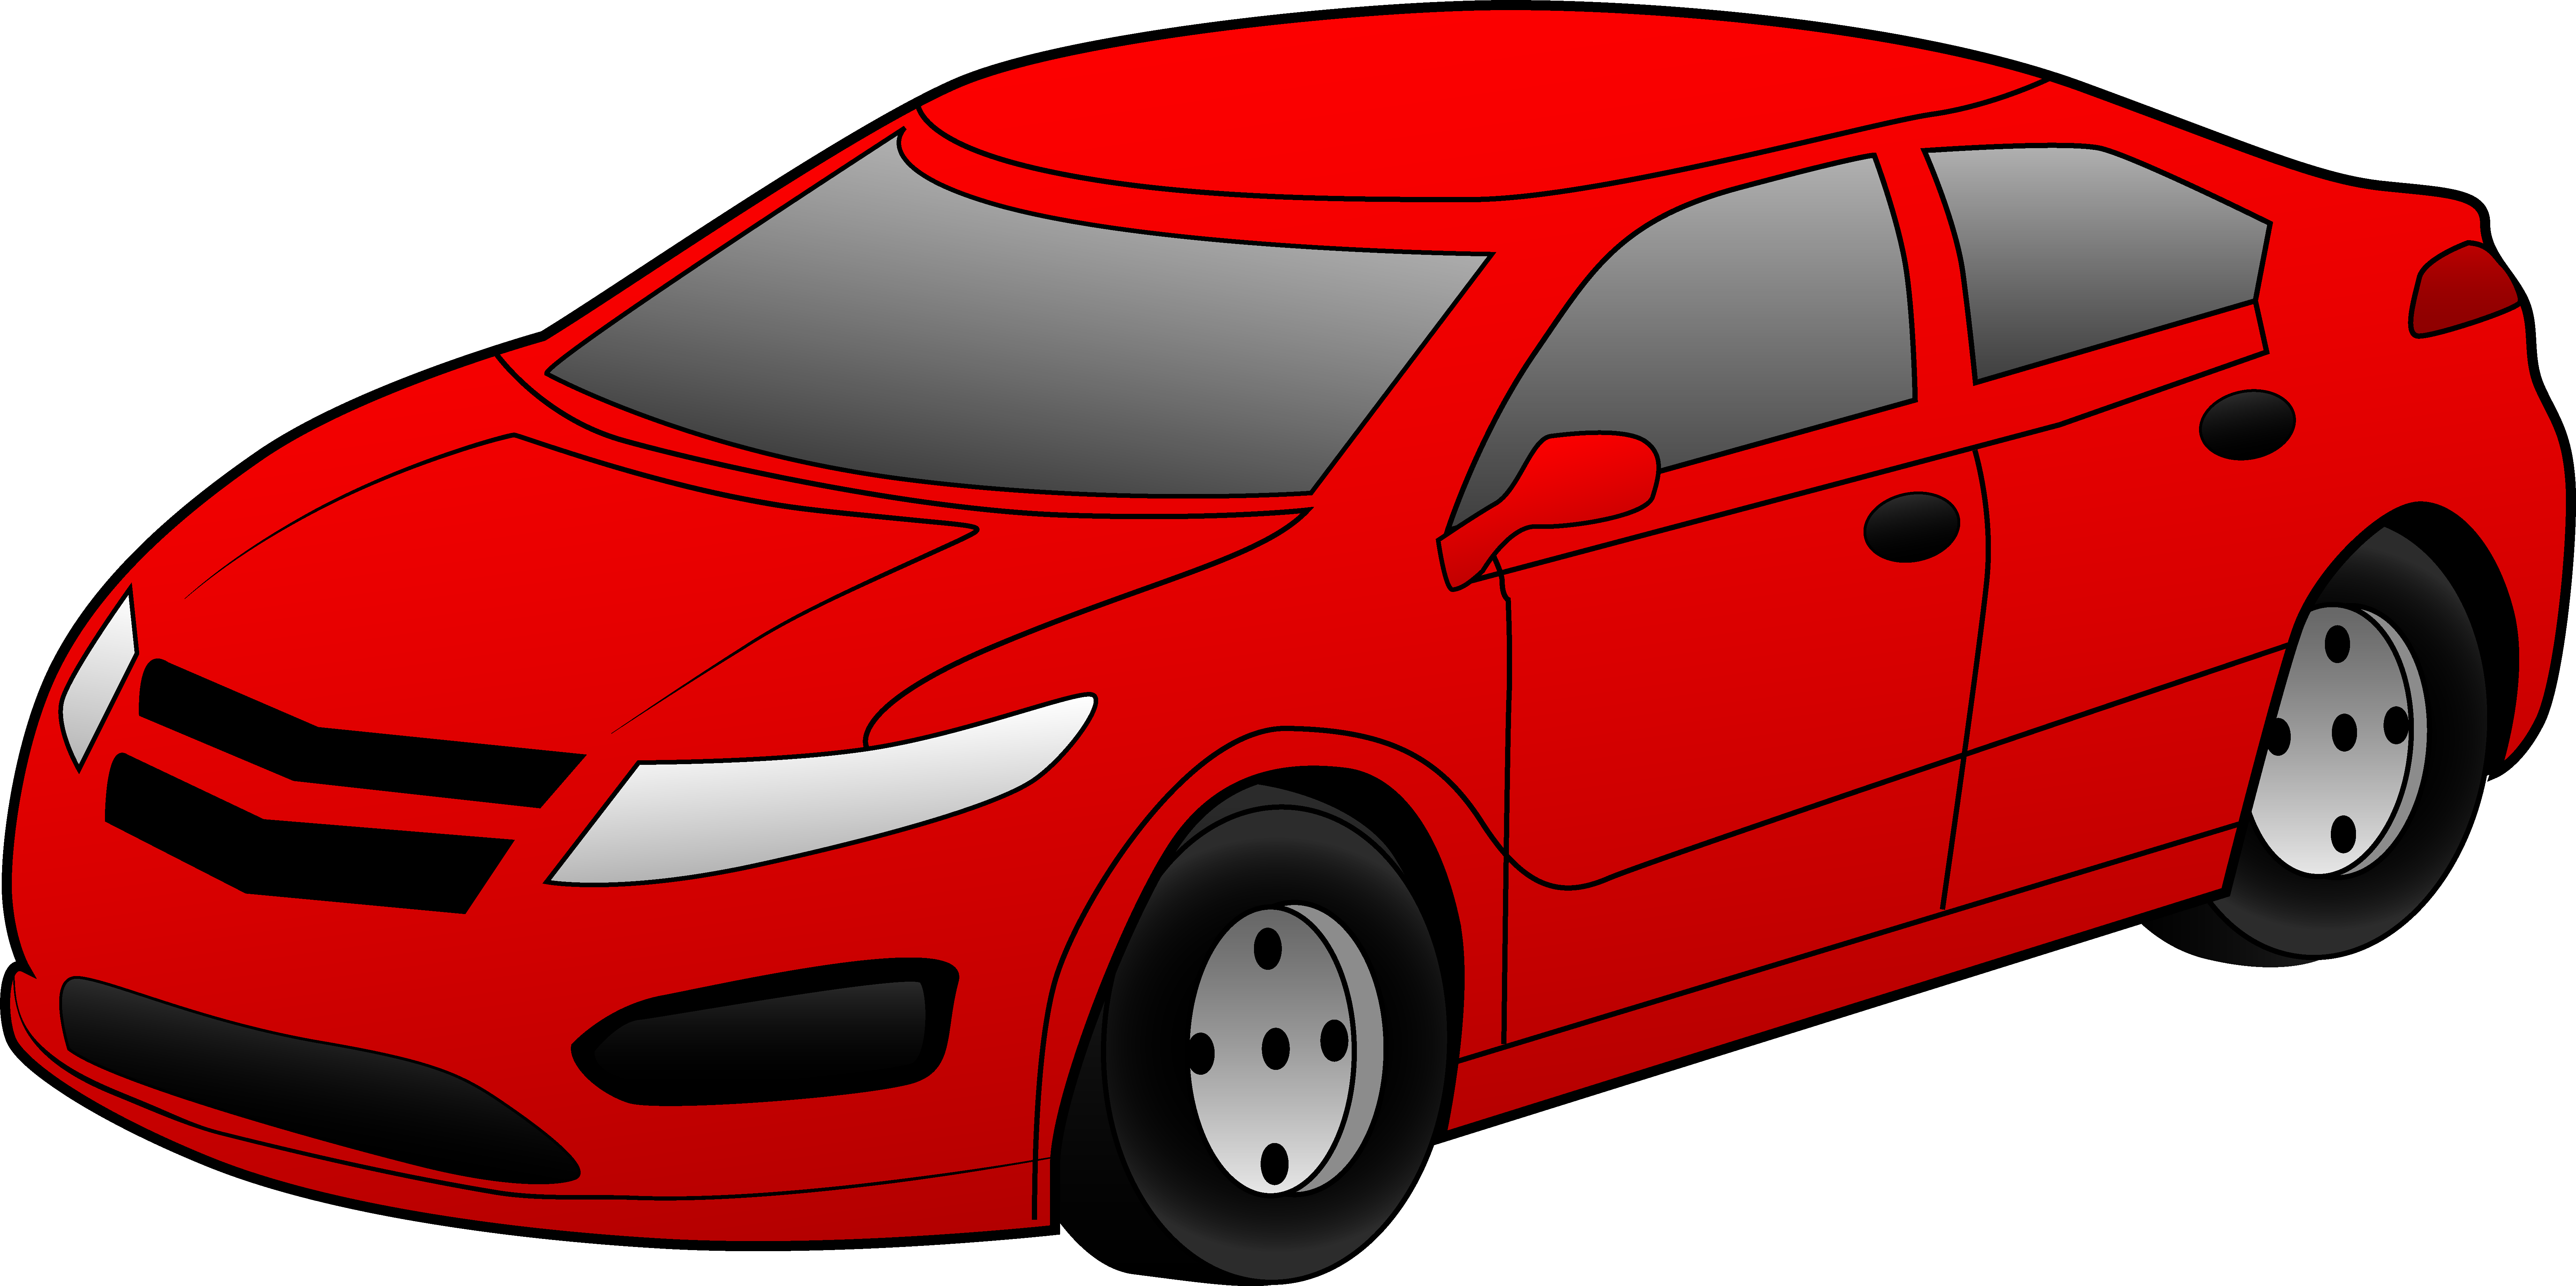 Cute Red Toy Car Clip Art